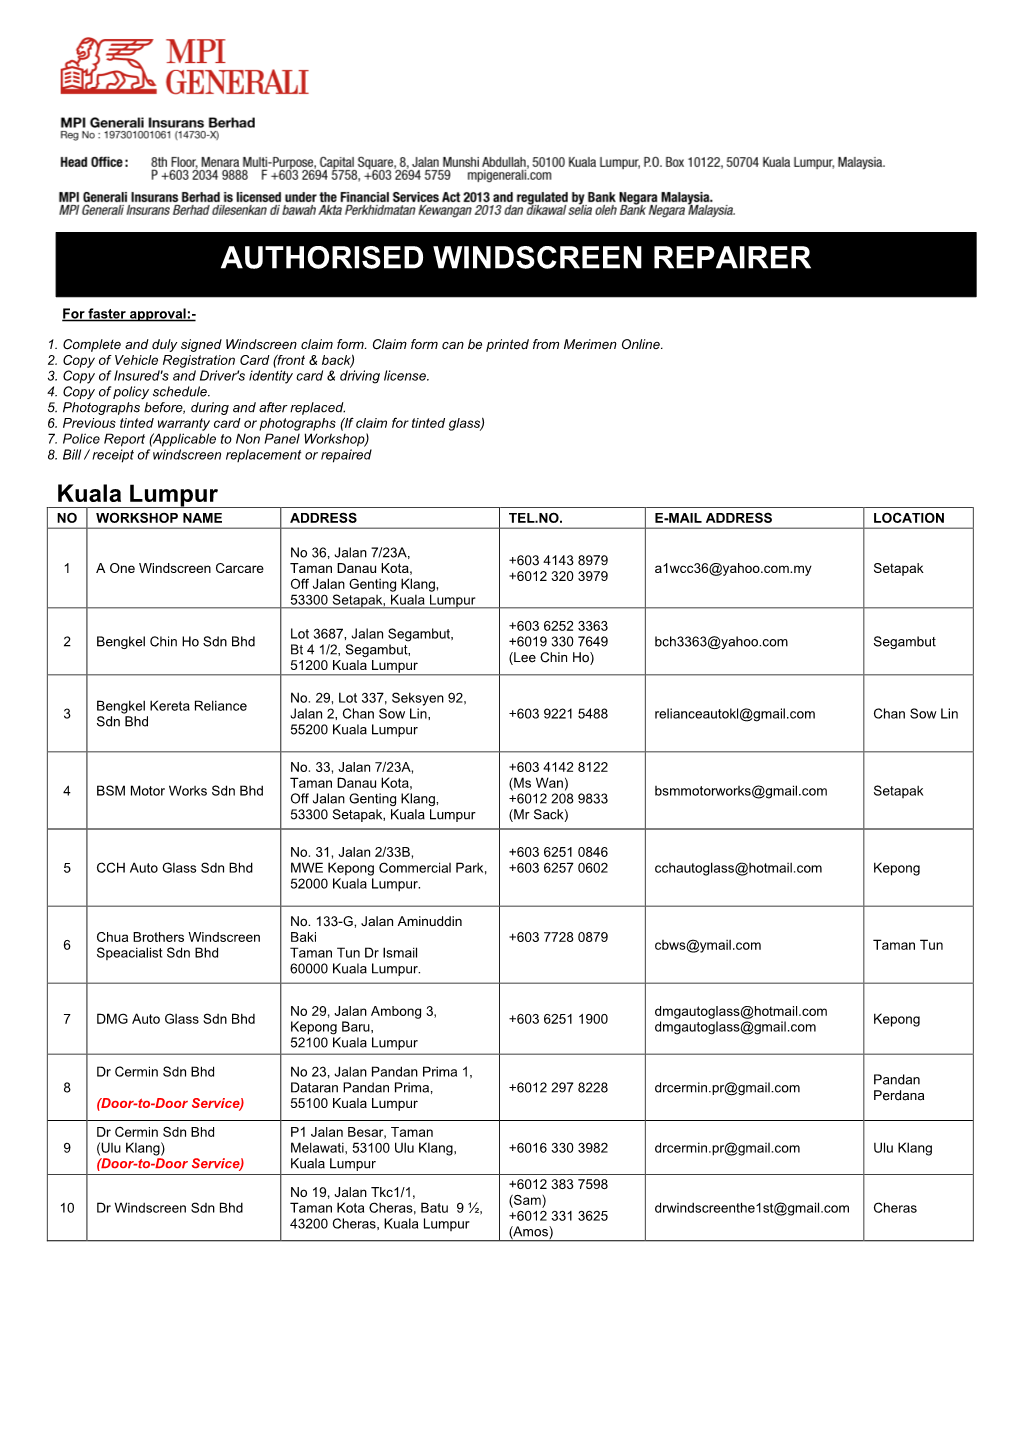 Authorised Windscreen Repairer